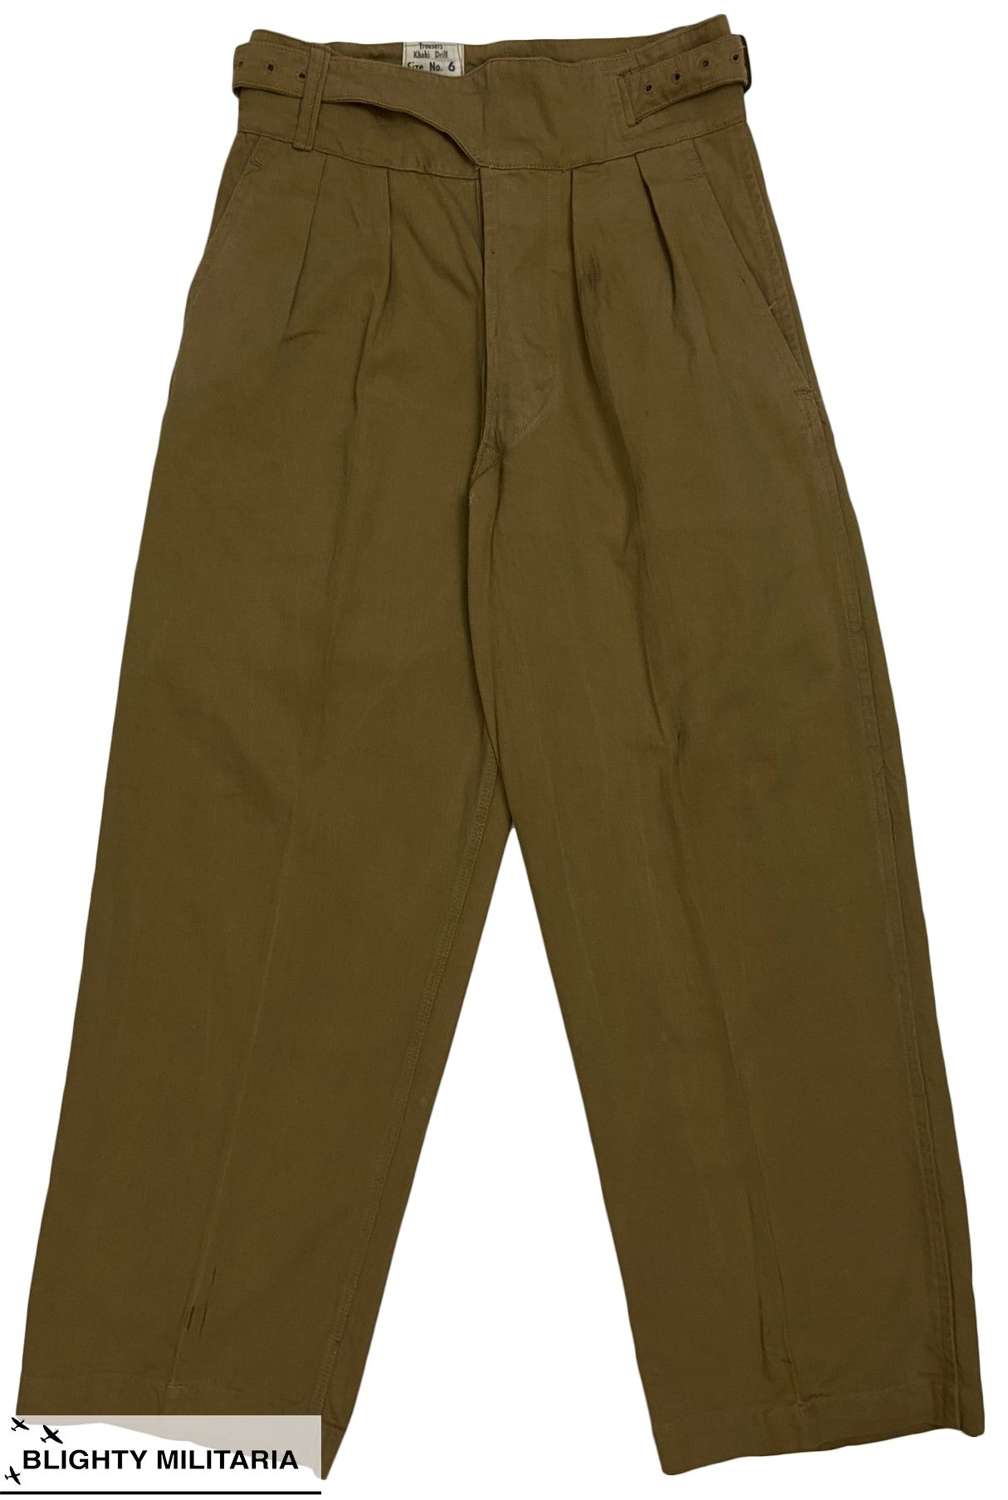 Original 1963 Dated British Army 1950 Pattern Khaki Drill Trousers